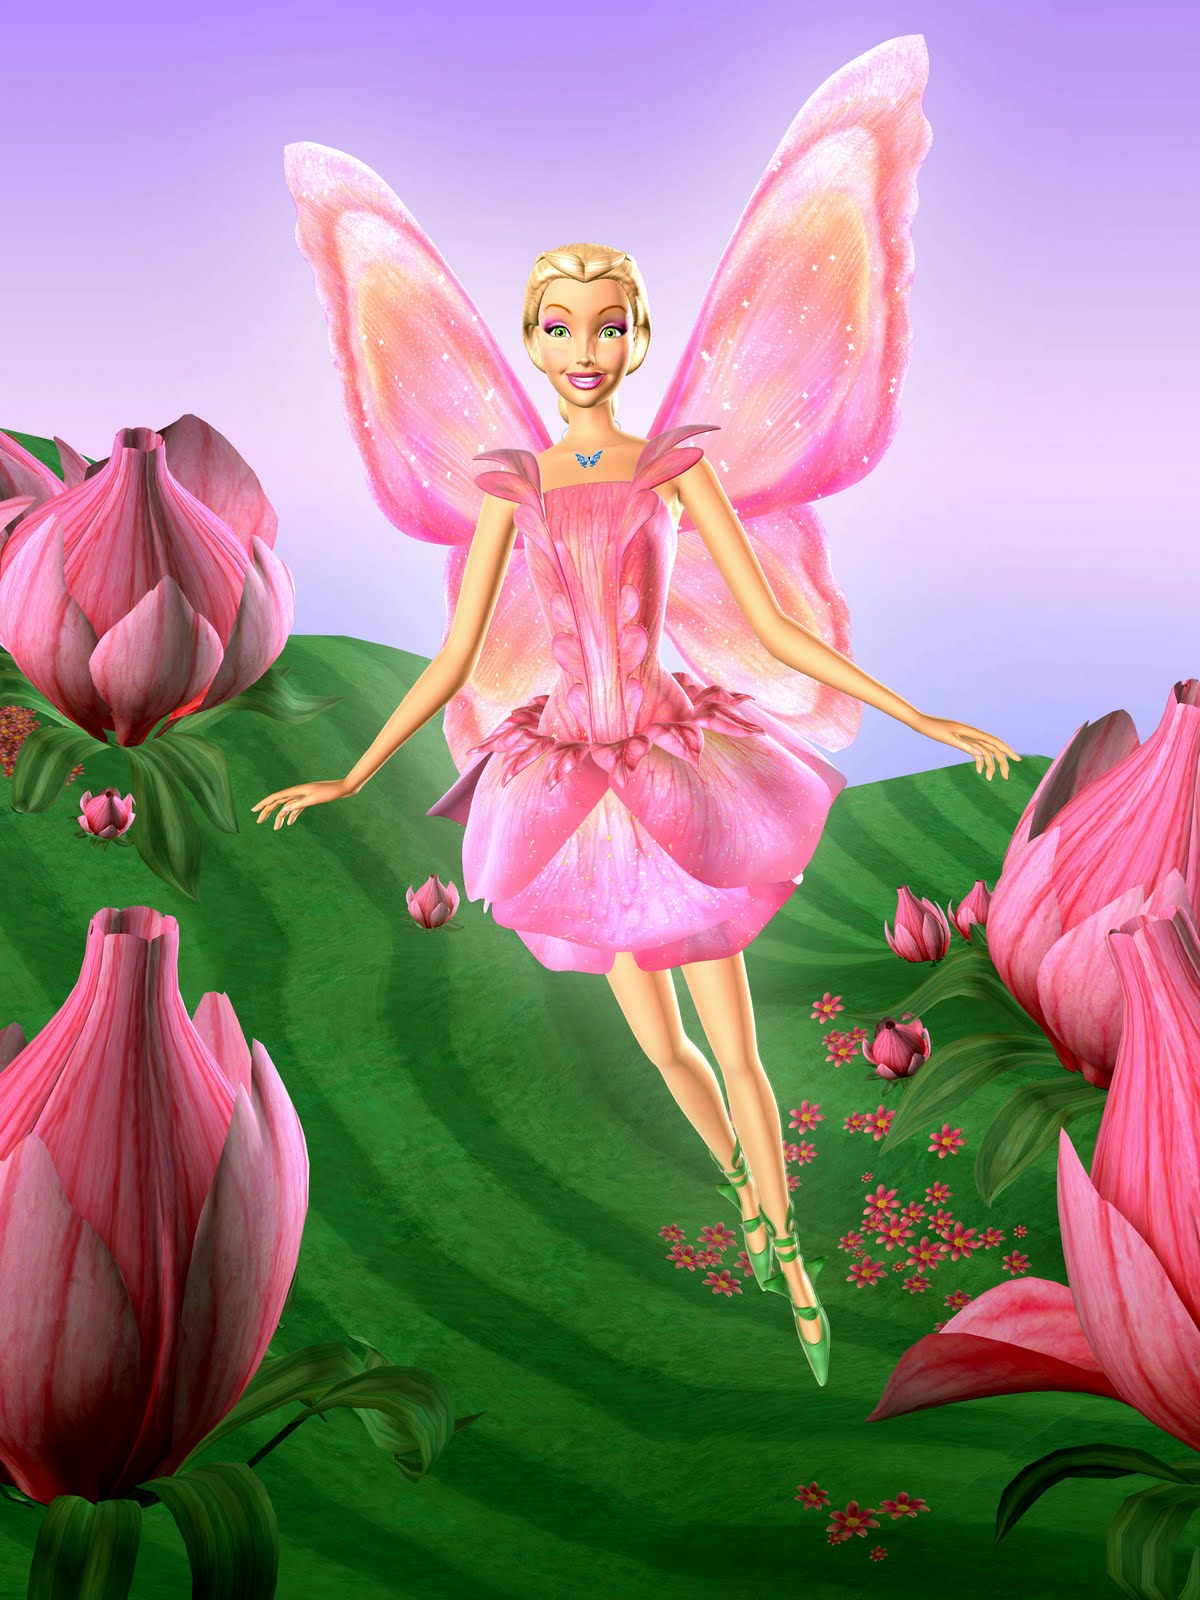 Cartoon barbie princess |The Free Images